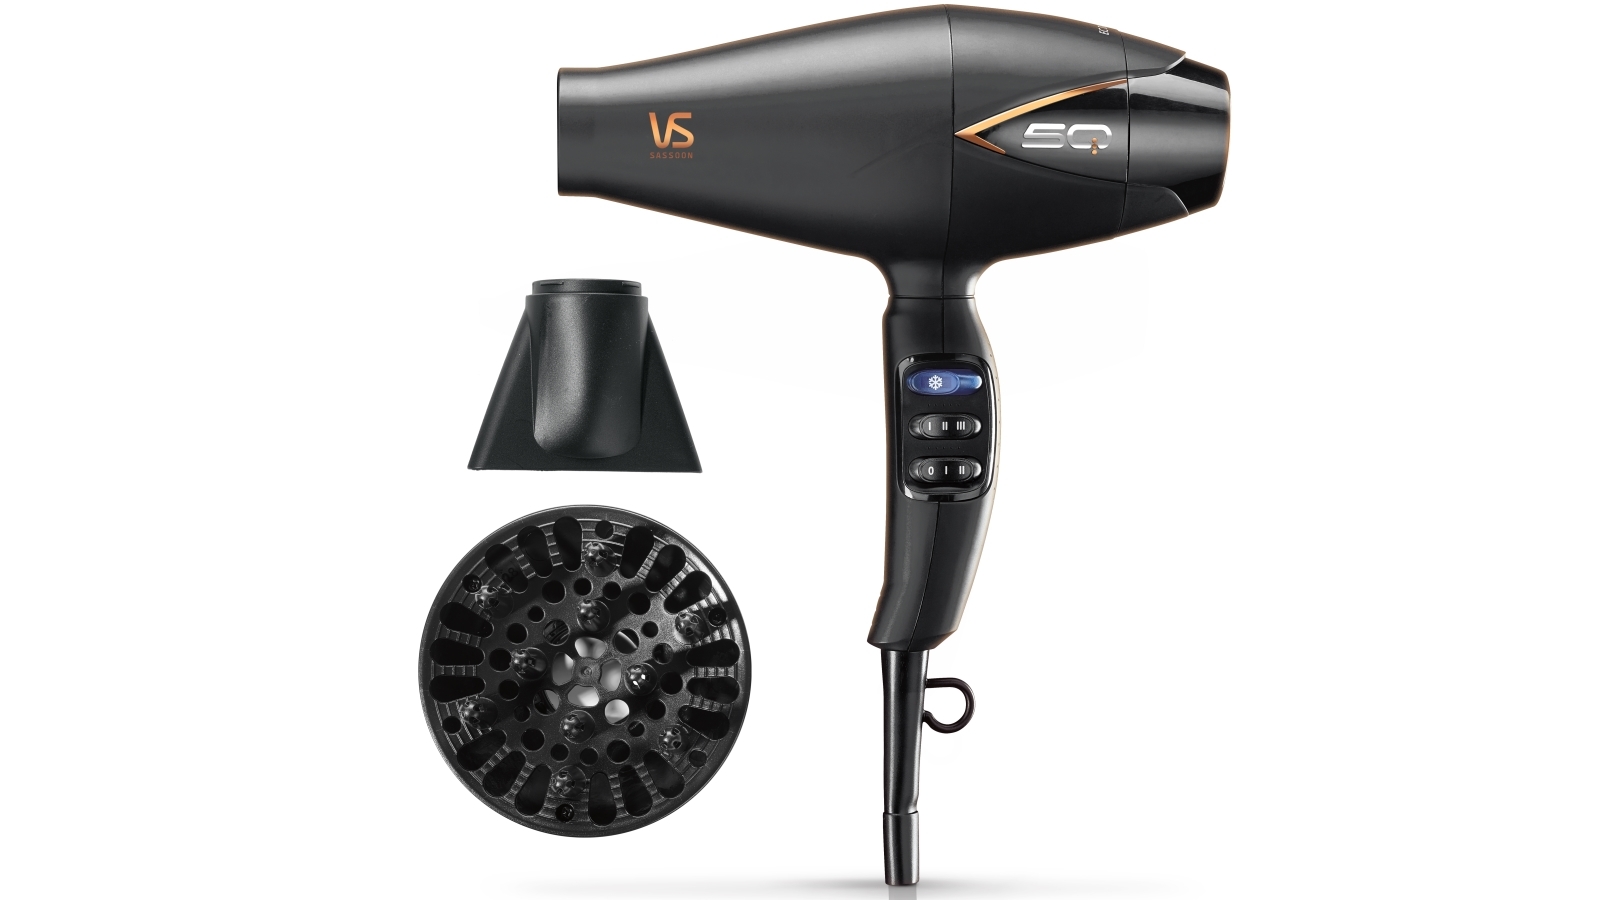 vidal sassoon hair dryer